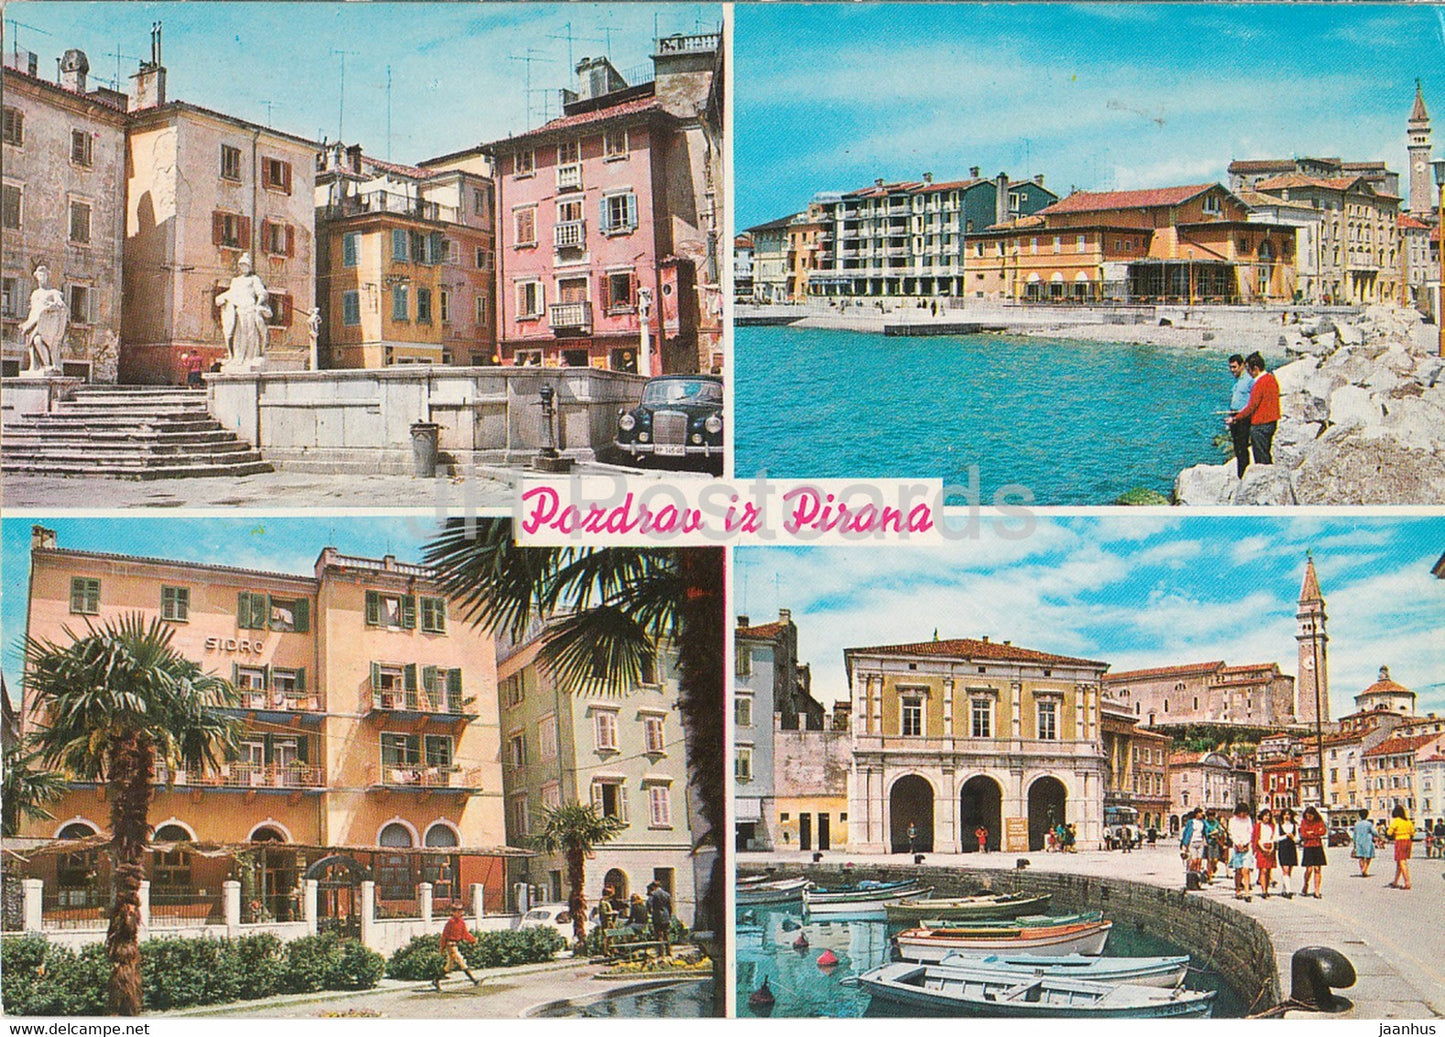 Pozdrav iz Pirana - Piran - town view - multiview - 2532 - 1978 - Yugoslavia - Slovenia - used - JH Postcards